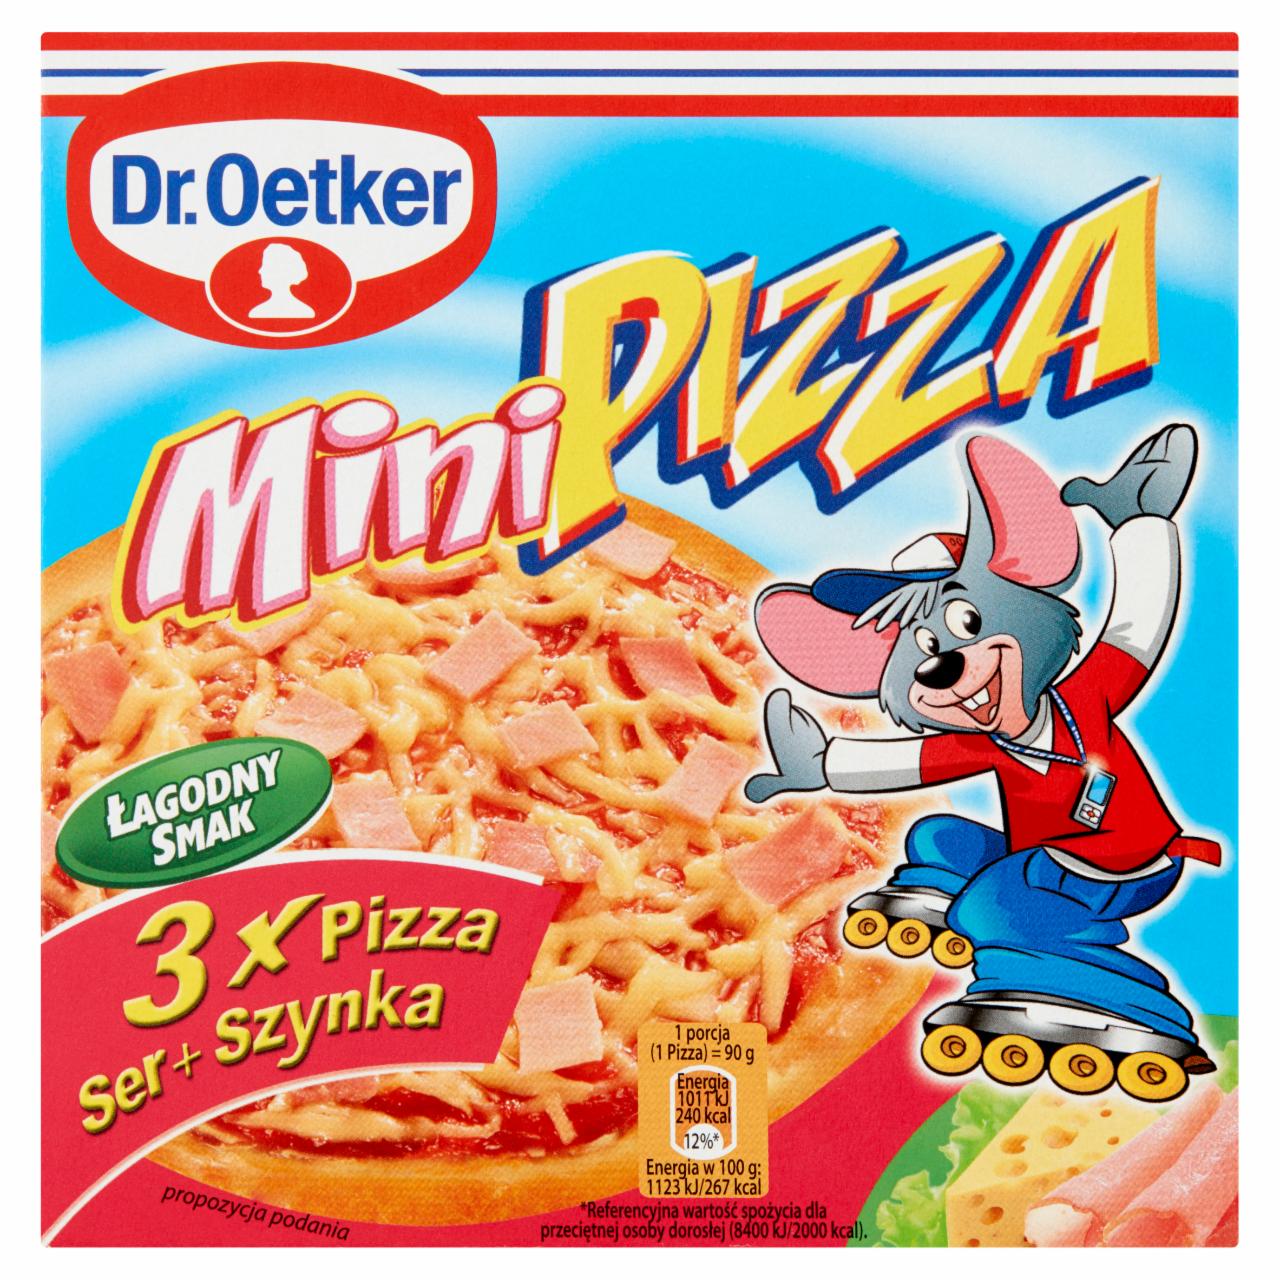 Zdjęcia - Dr. Oetker Mini pizza ser + szynka 270 g (3 sztuki)